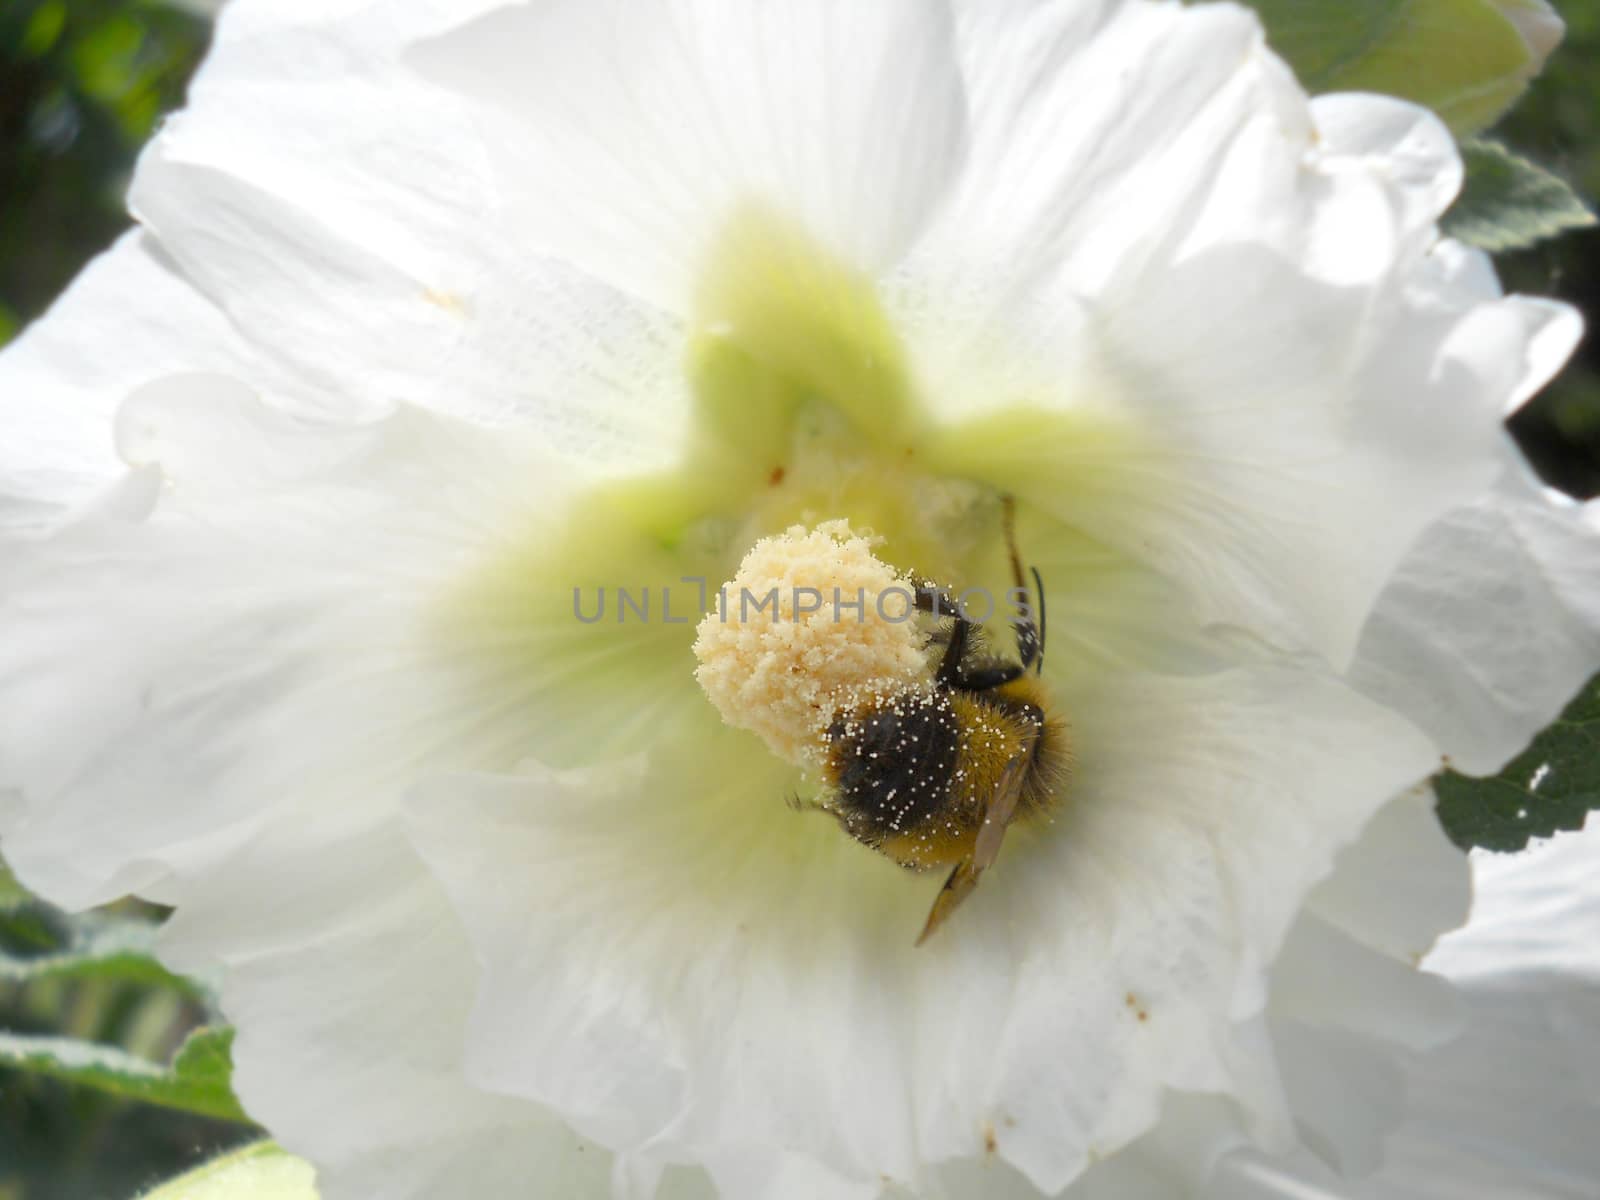 bumblebee inside white hollyhock flower





bumblebee inside hollyhock flower